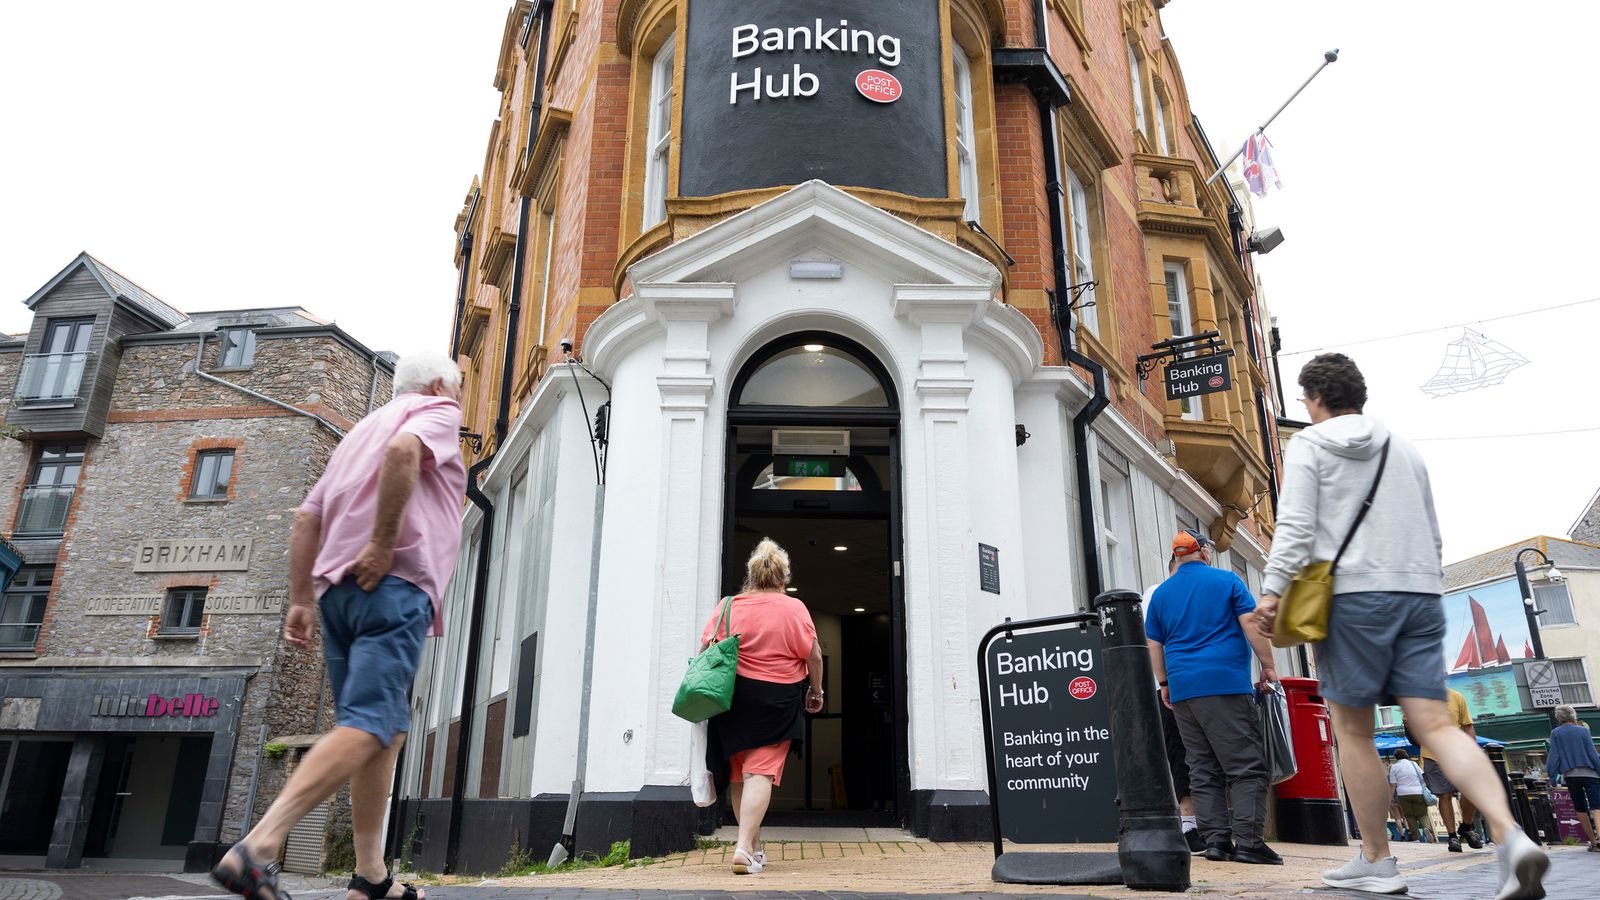 Lenders pledge banking hub upgrade amid political row over cash access